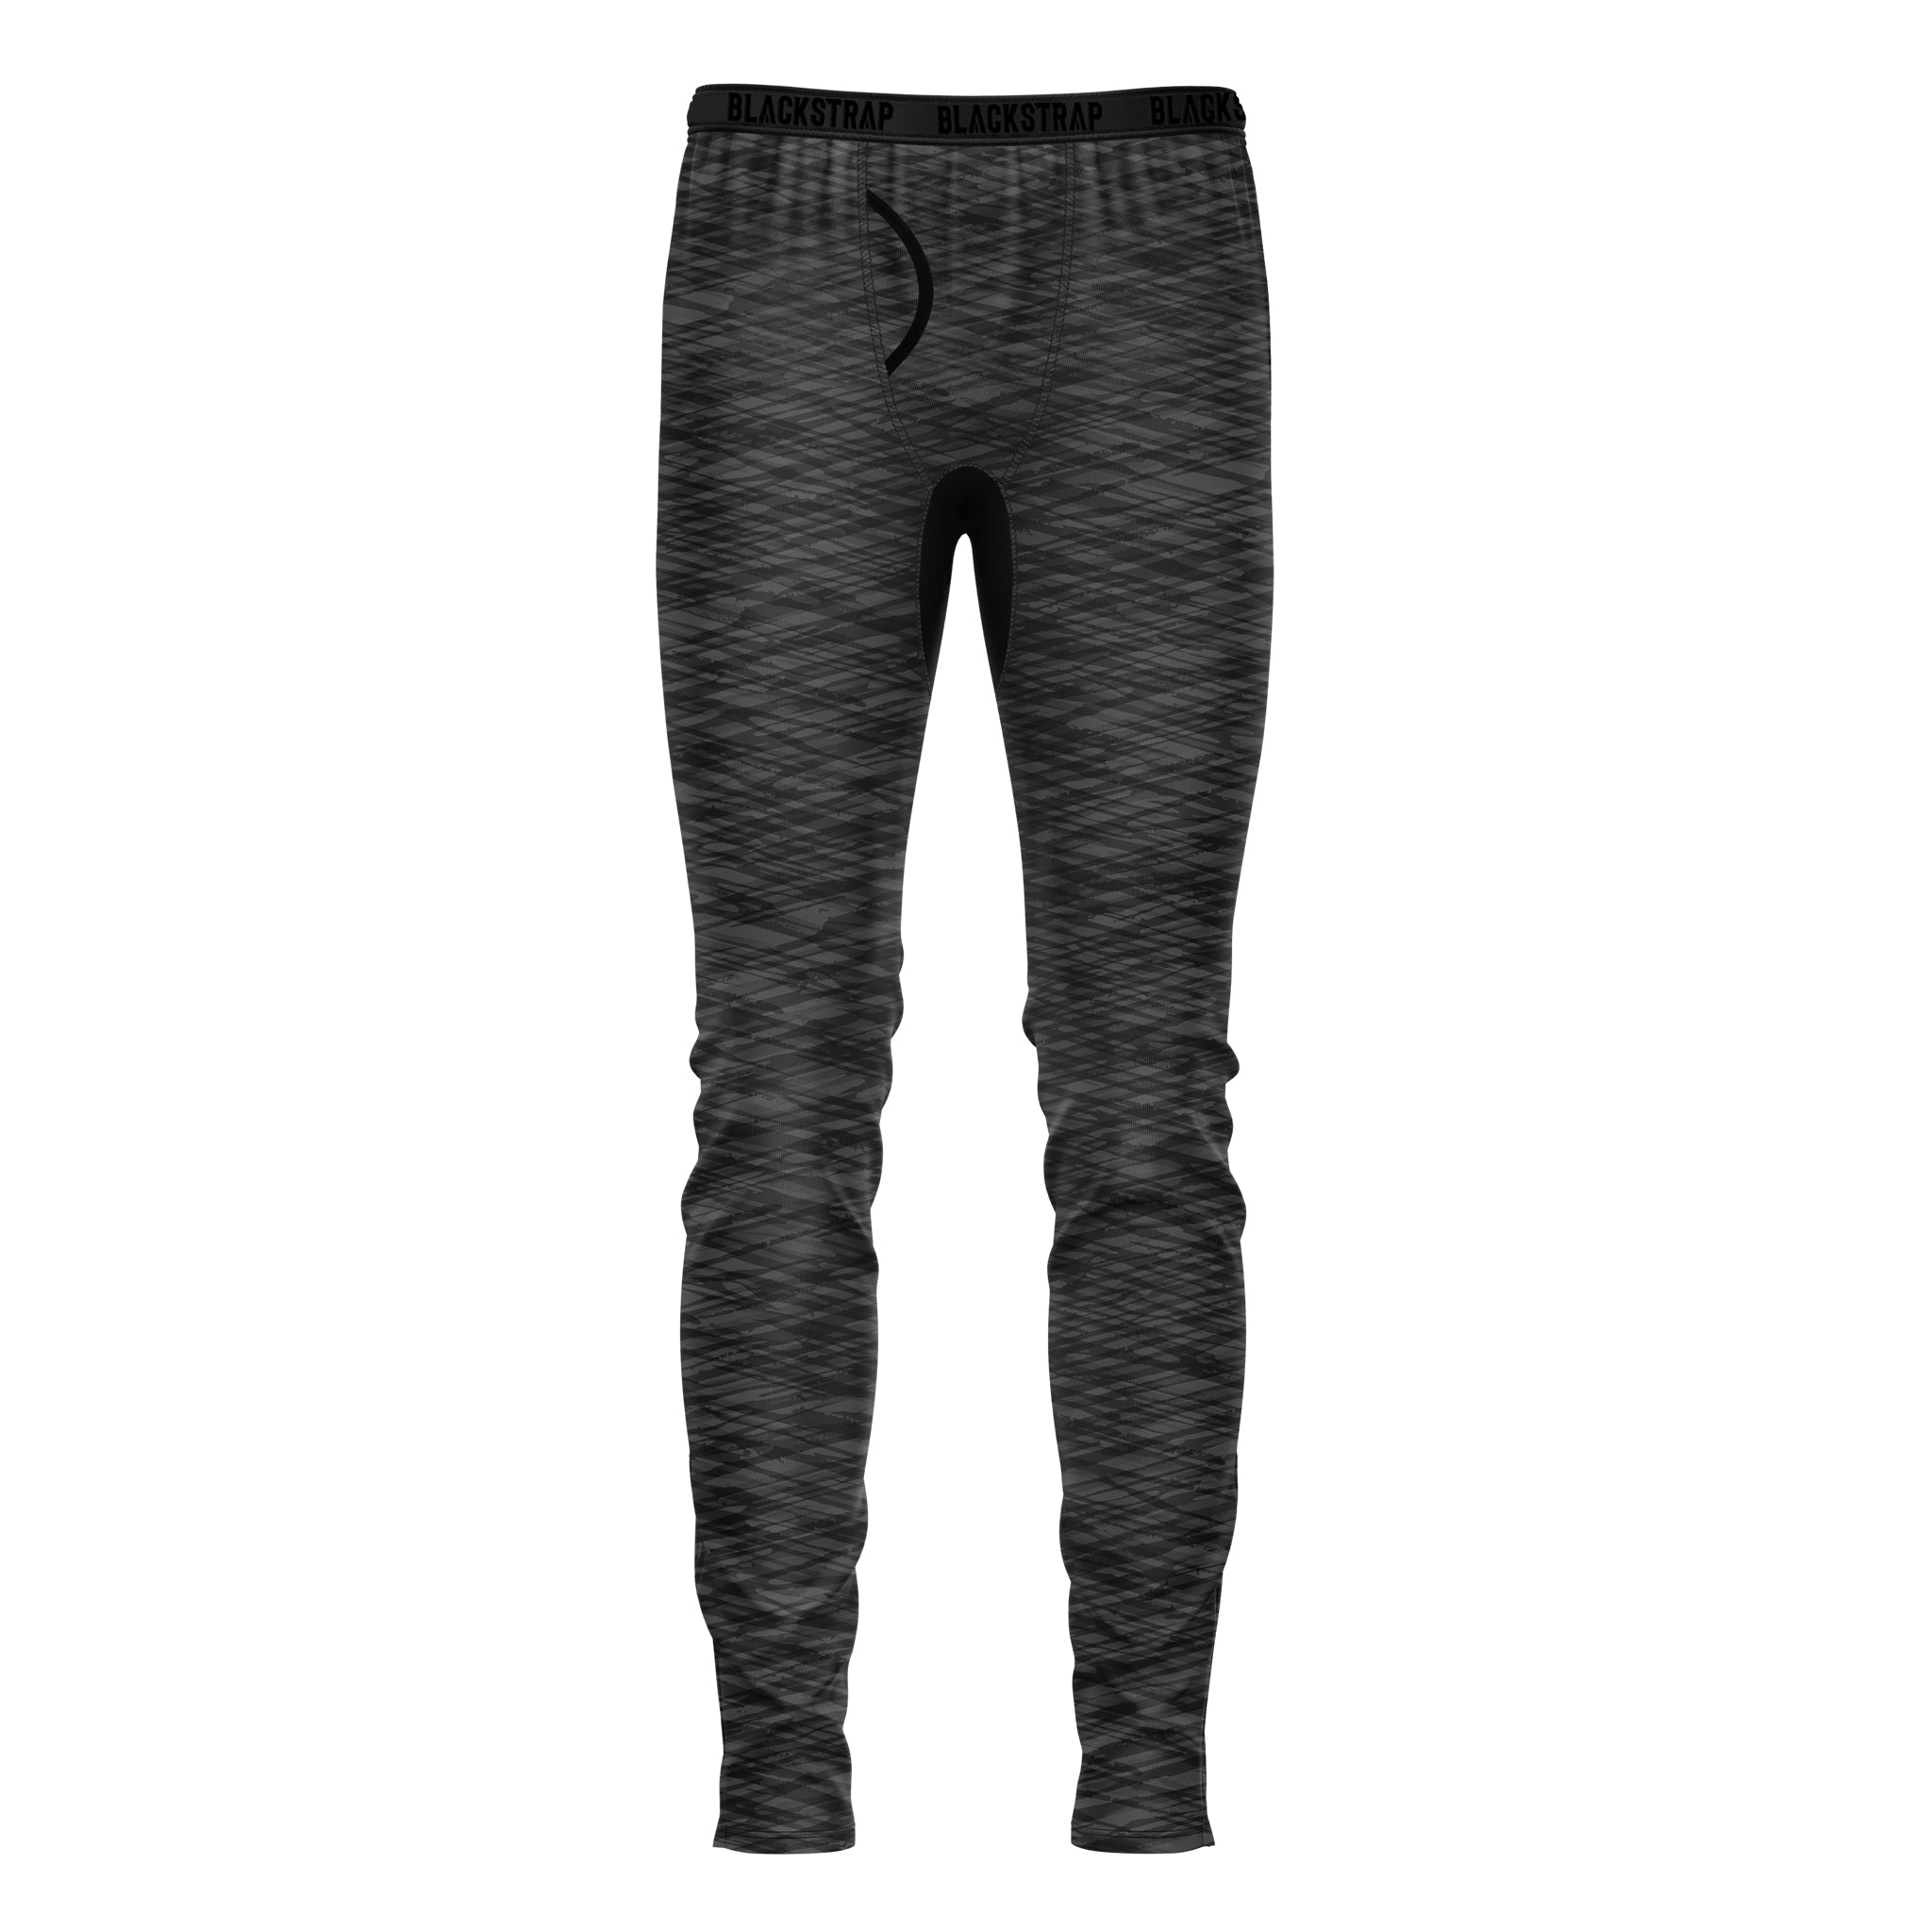 Men's Summit Base Layer Pants BlackStrap Hatched Charcoal S 